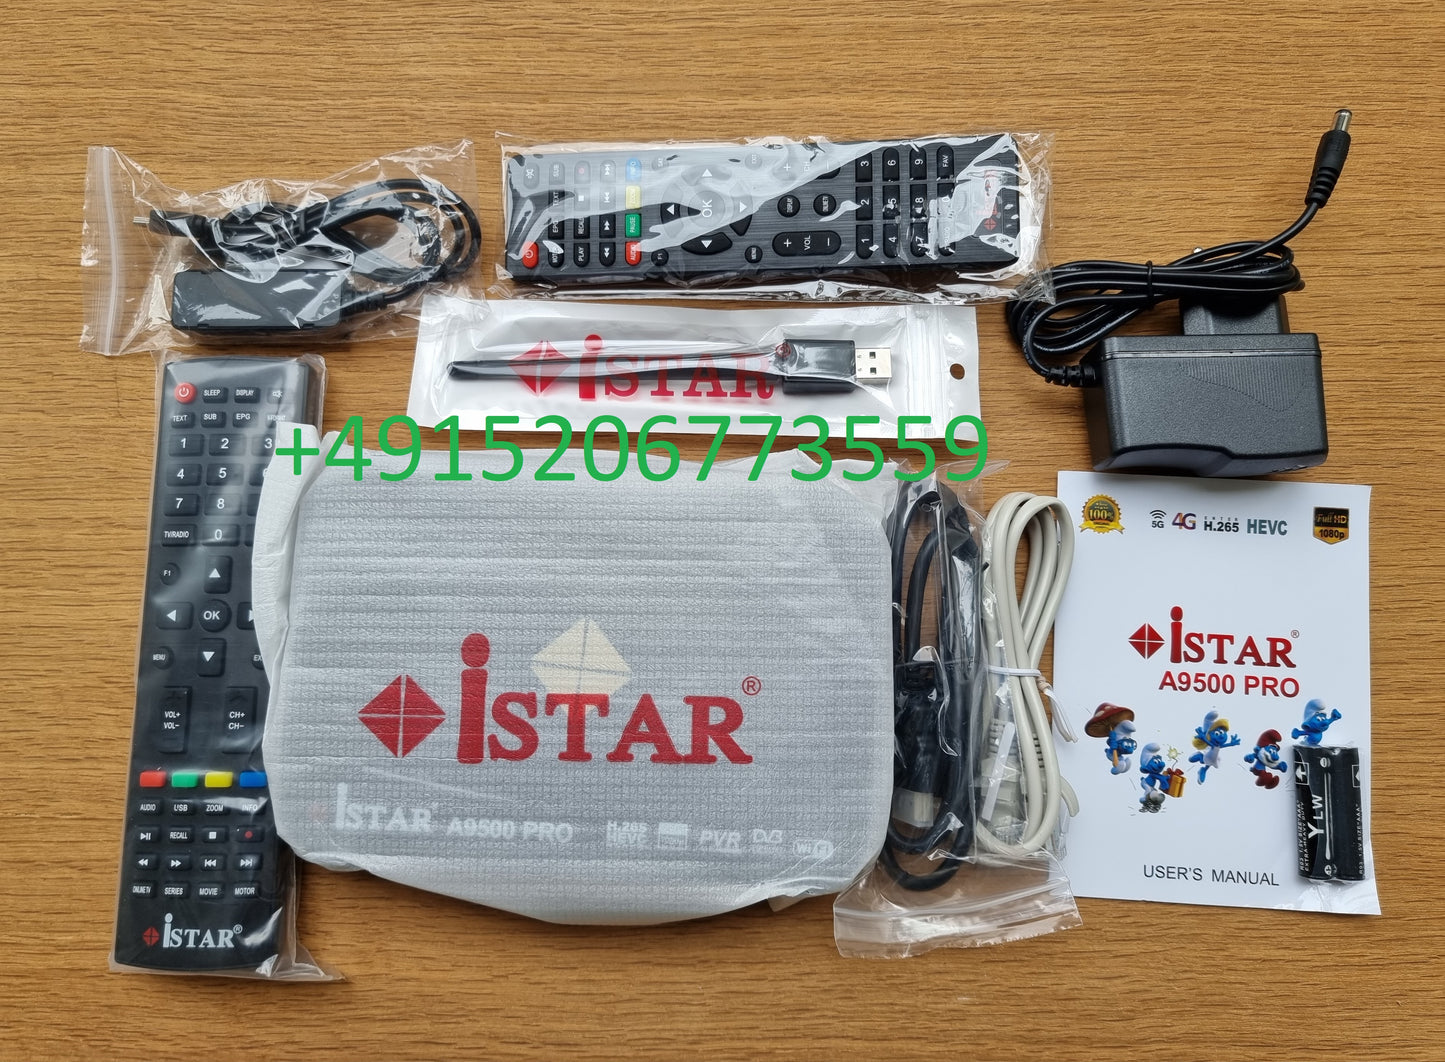 iStar A9500 Pro HD FHD TV BOX Sat Receiver OnlineTV Online TV Digital Box a 9500 pro tvbox satellit satellite